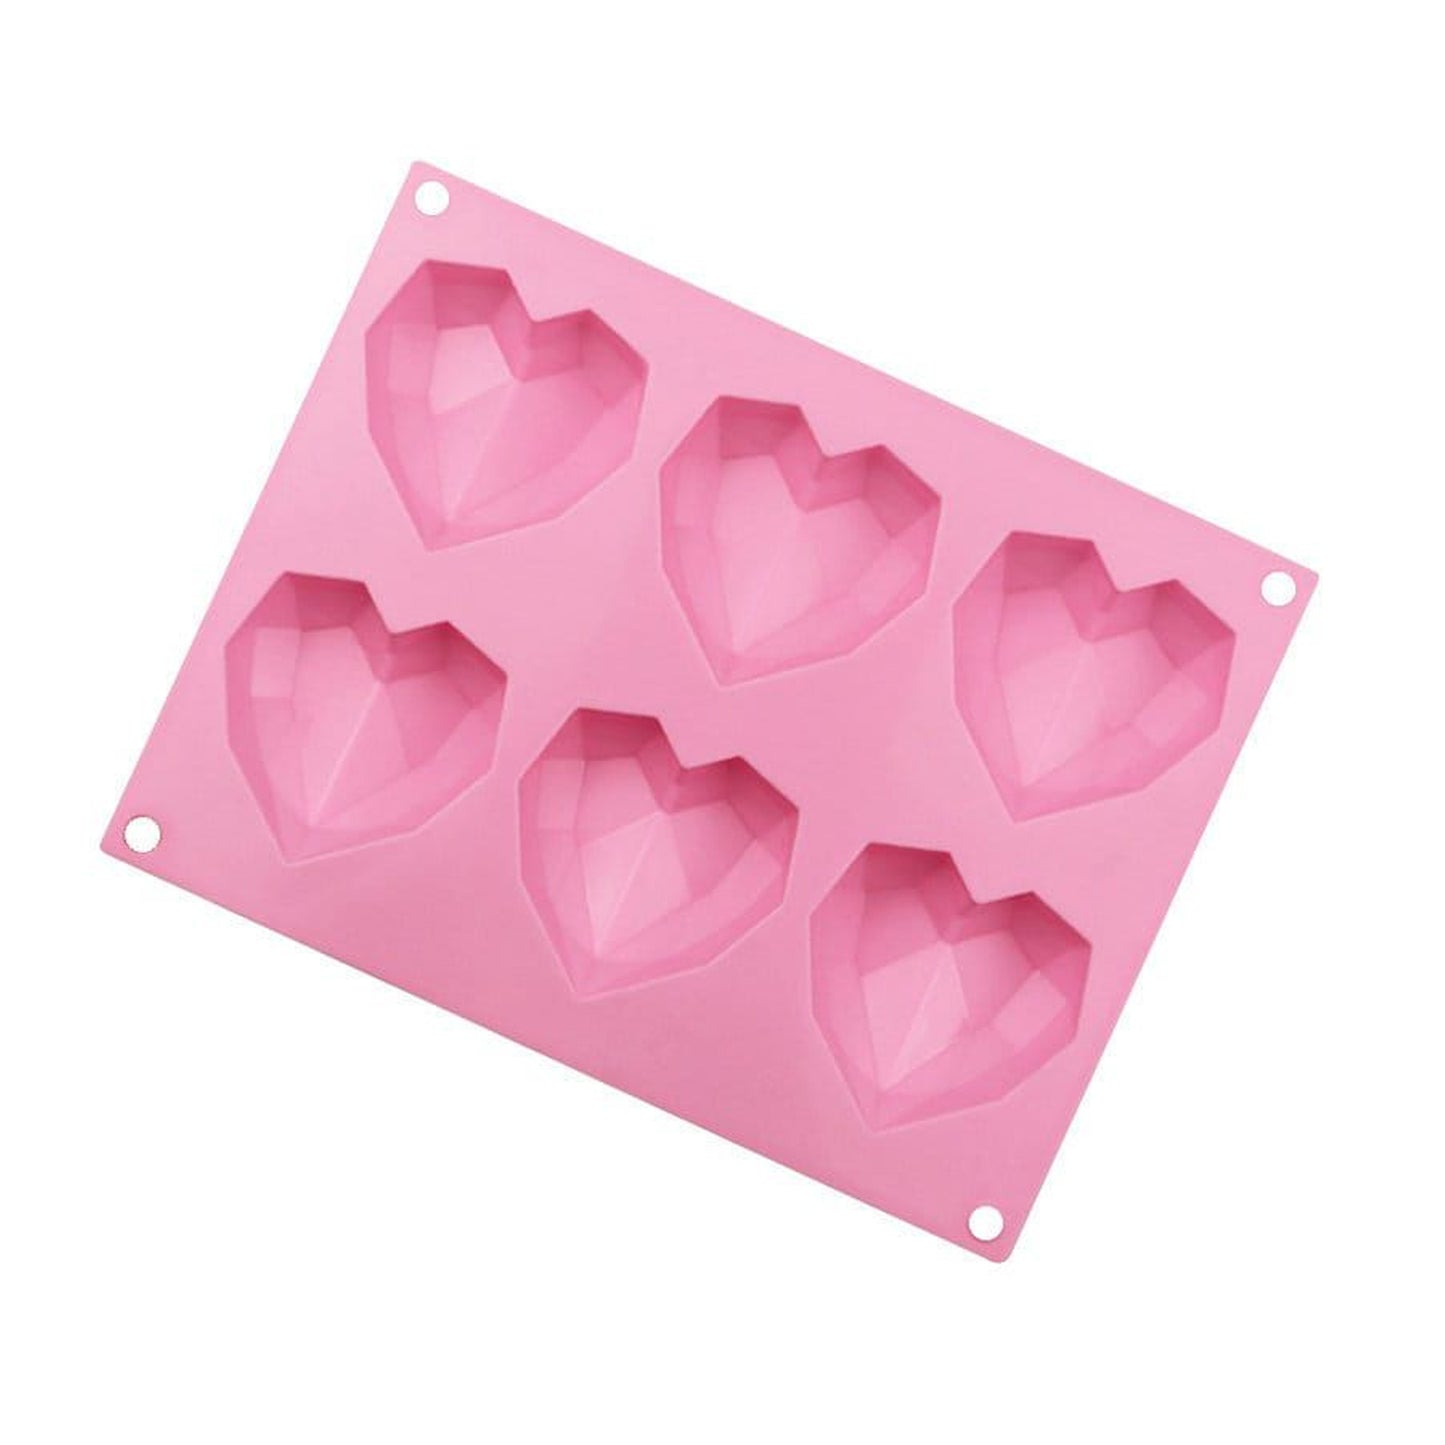 6 HOLE SILICONE 3D LOVE HEART SHAPE CAKE/CHOCOLATE MOLD